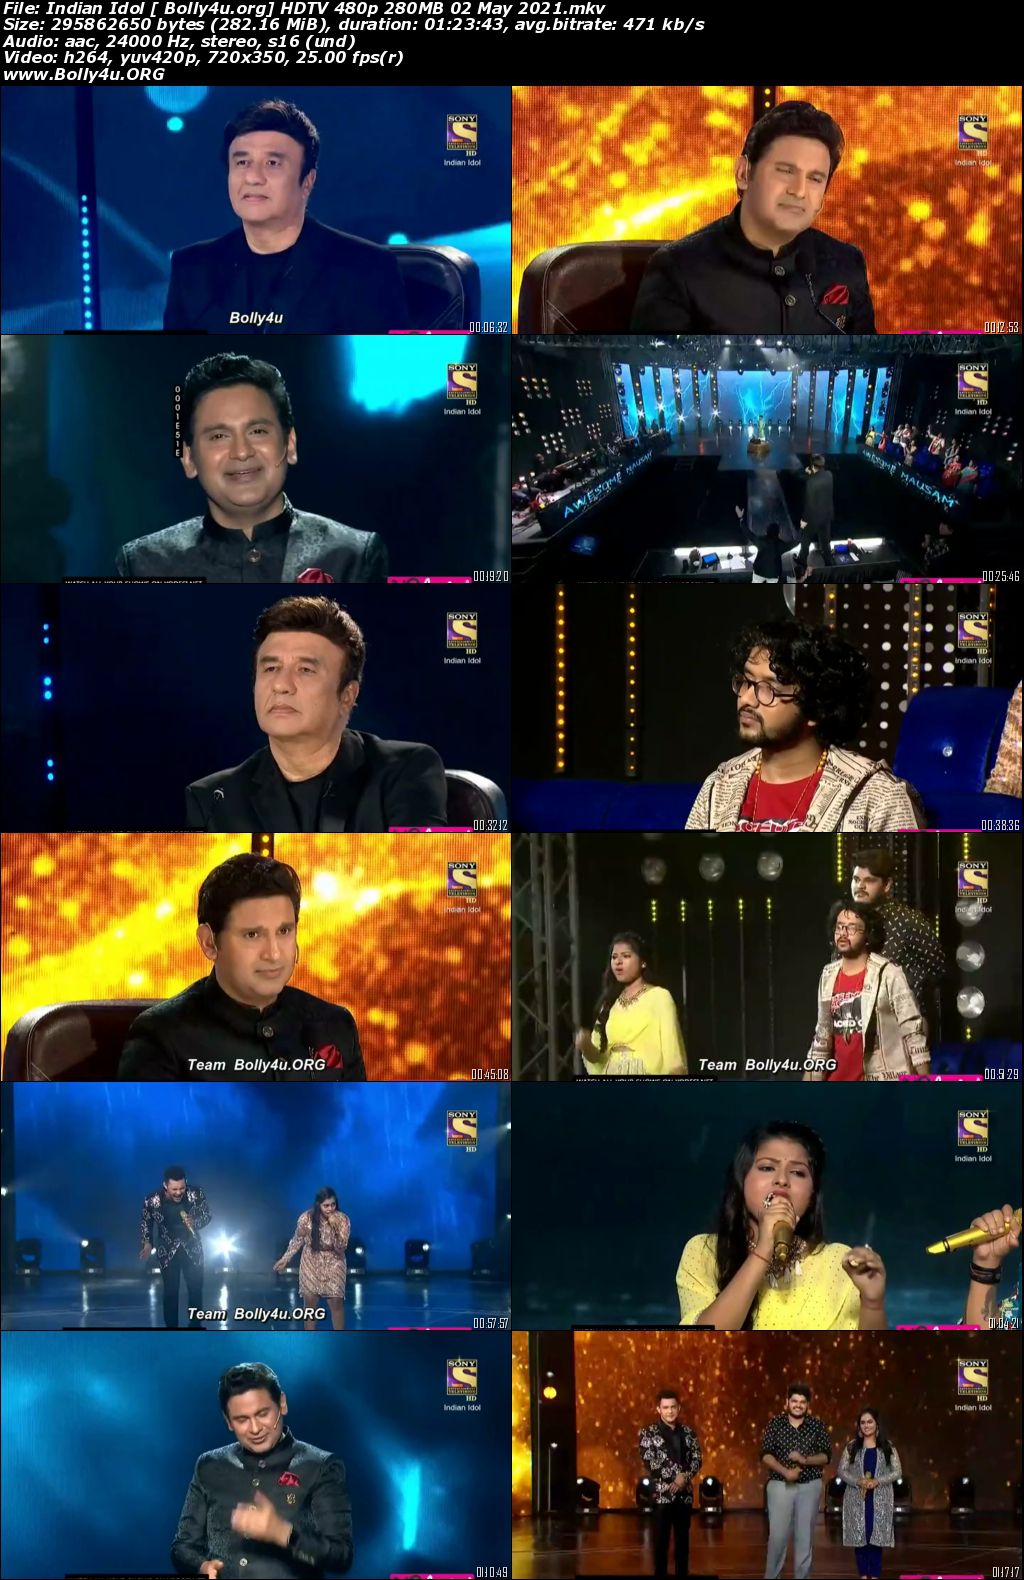 Indian Idol HDTV 480p 280MB 02 May 2021 Download